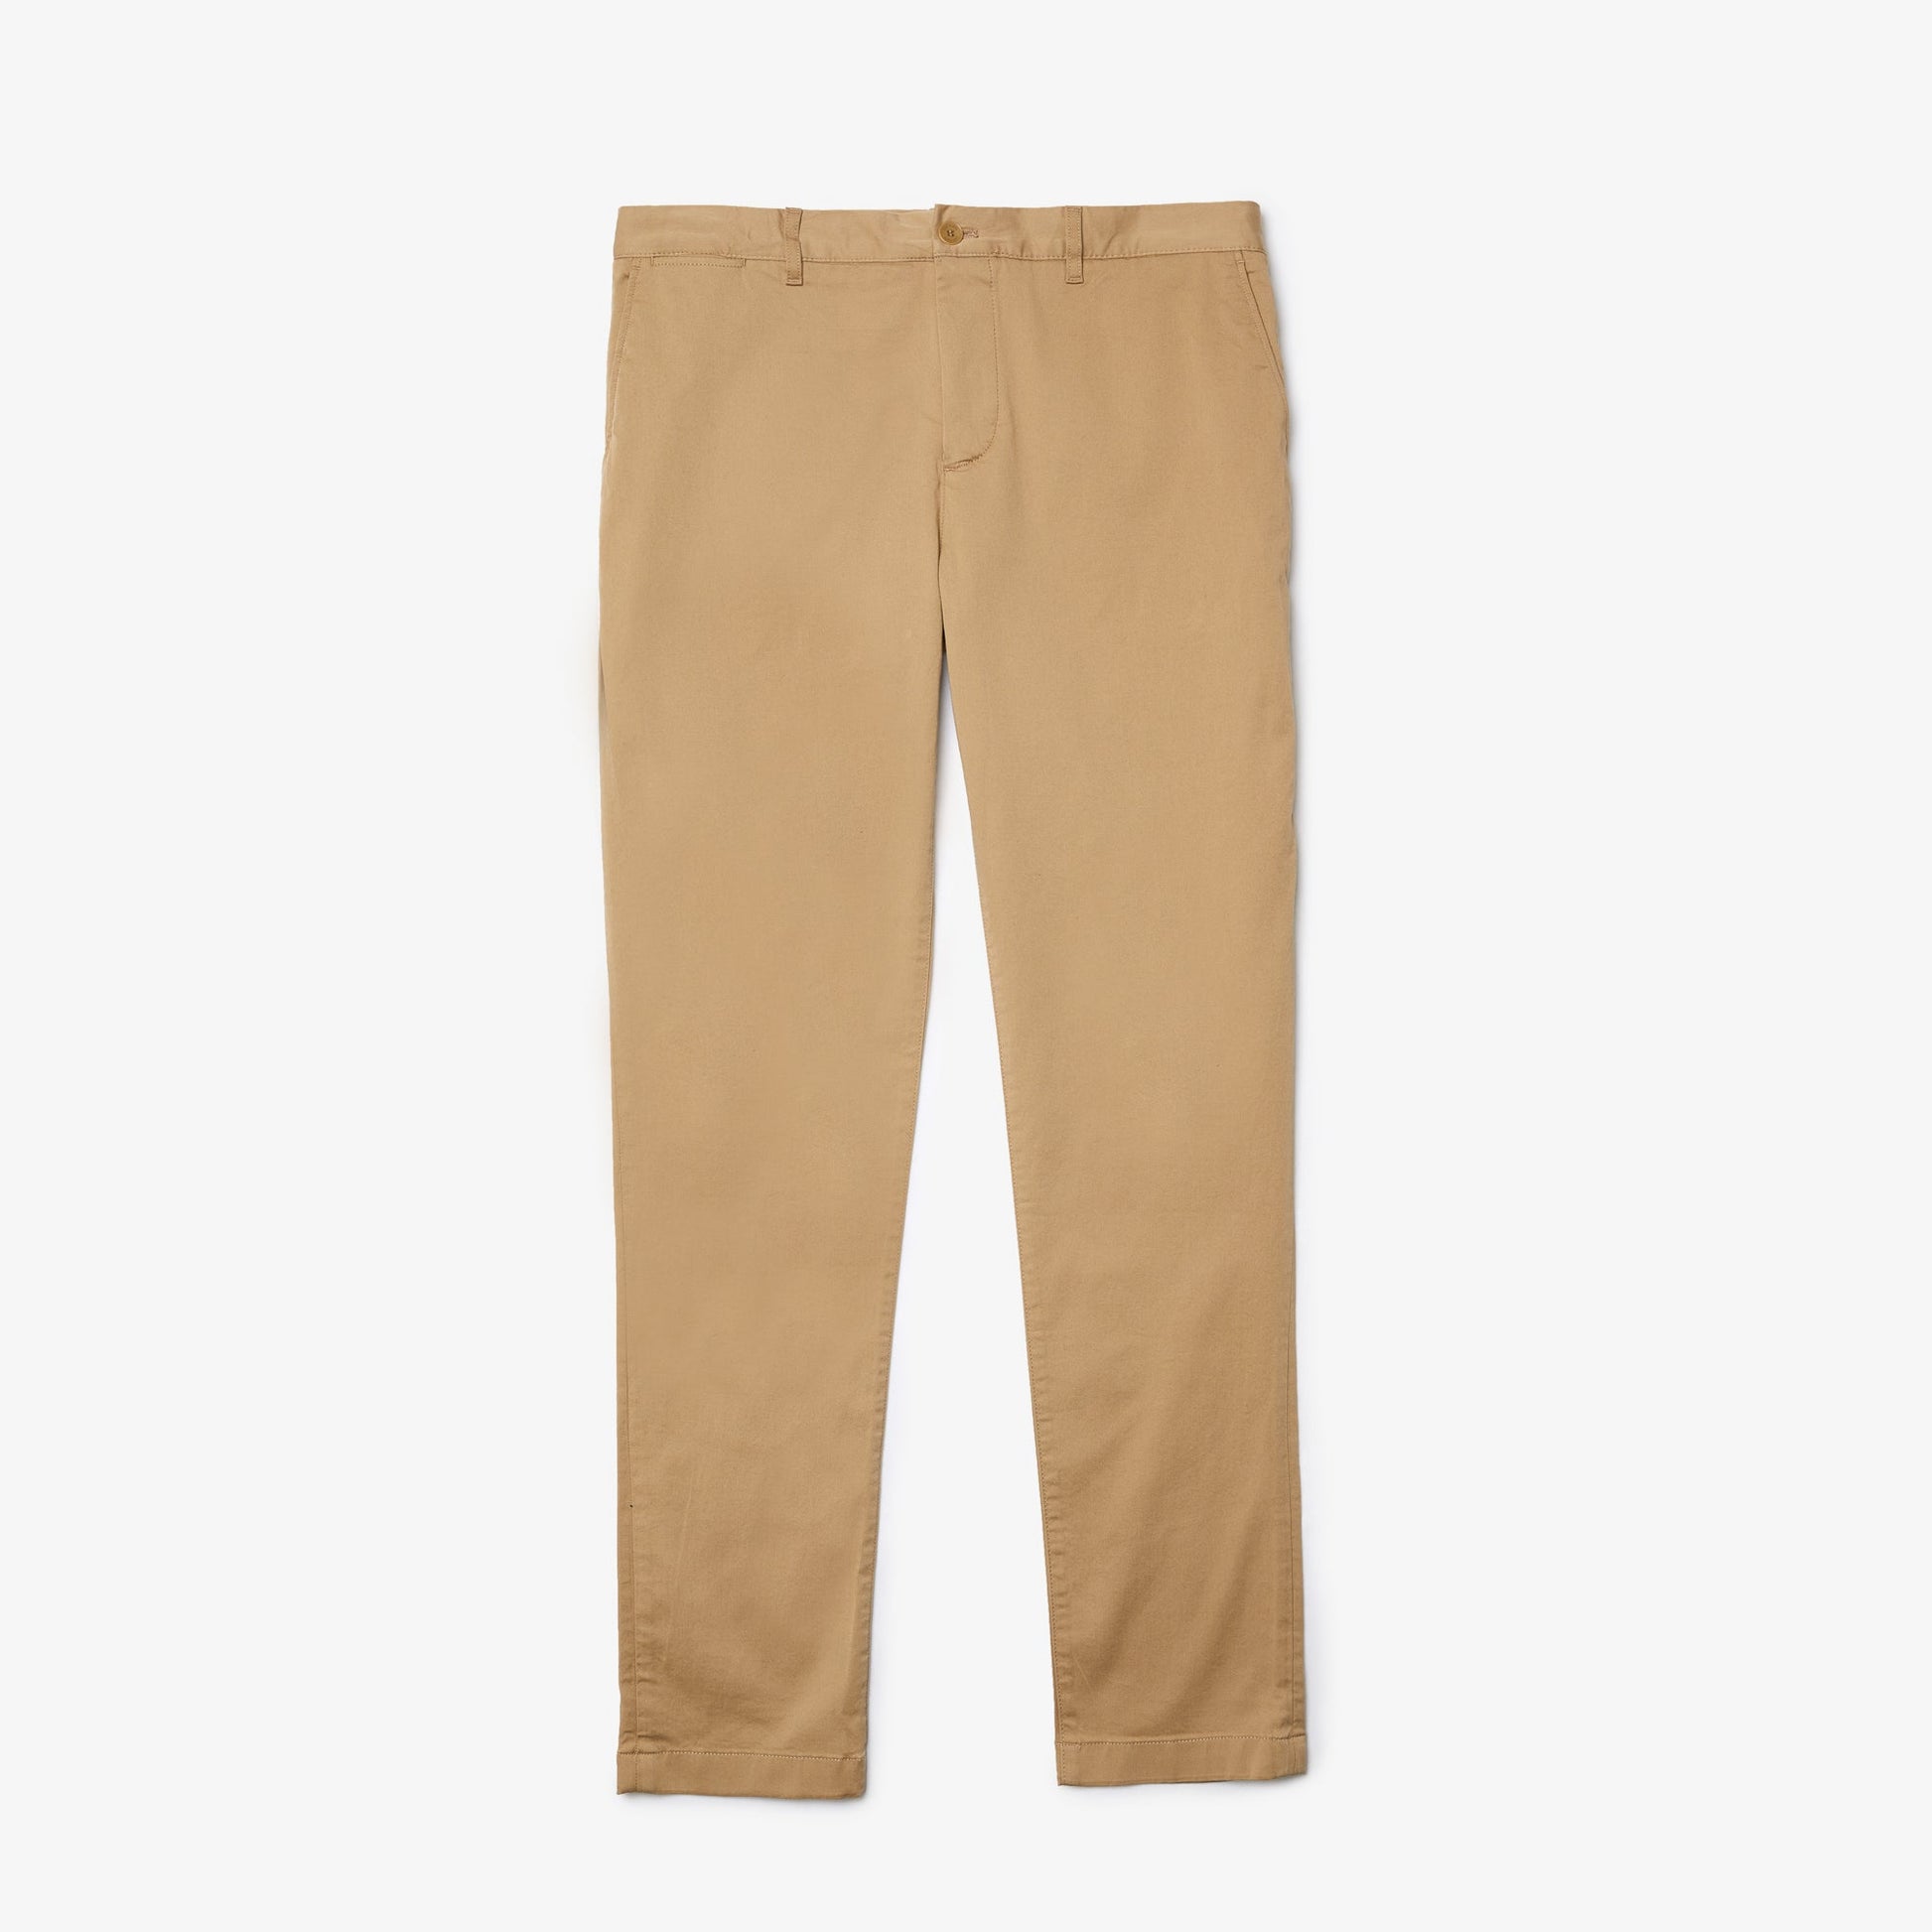 Lacoste Men's New Classic Slim Fit Stretch Cotton Trousers HH2661